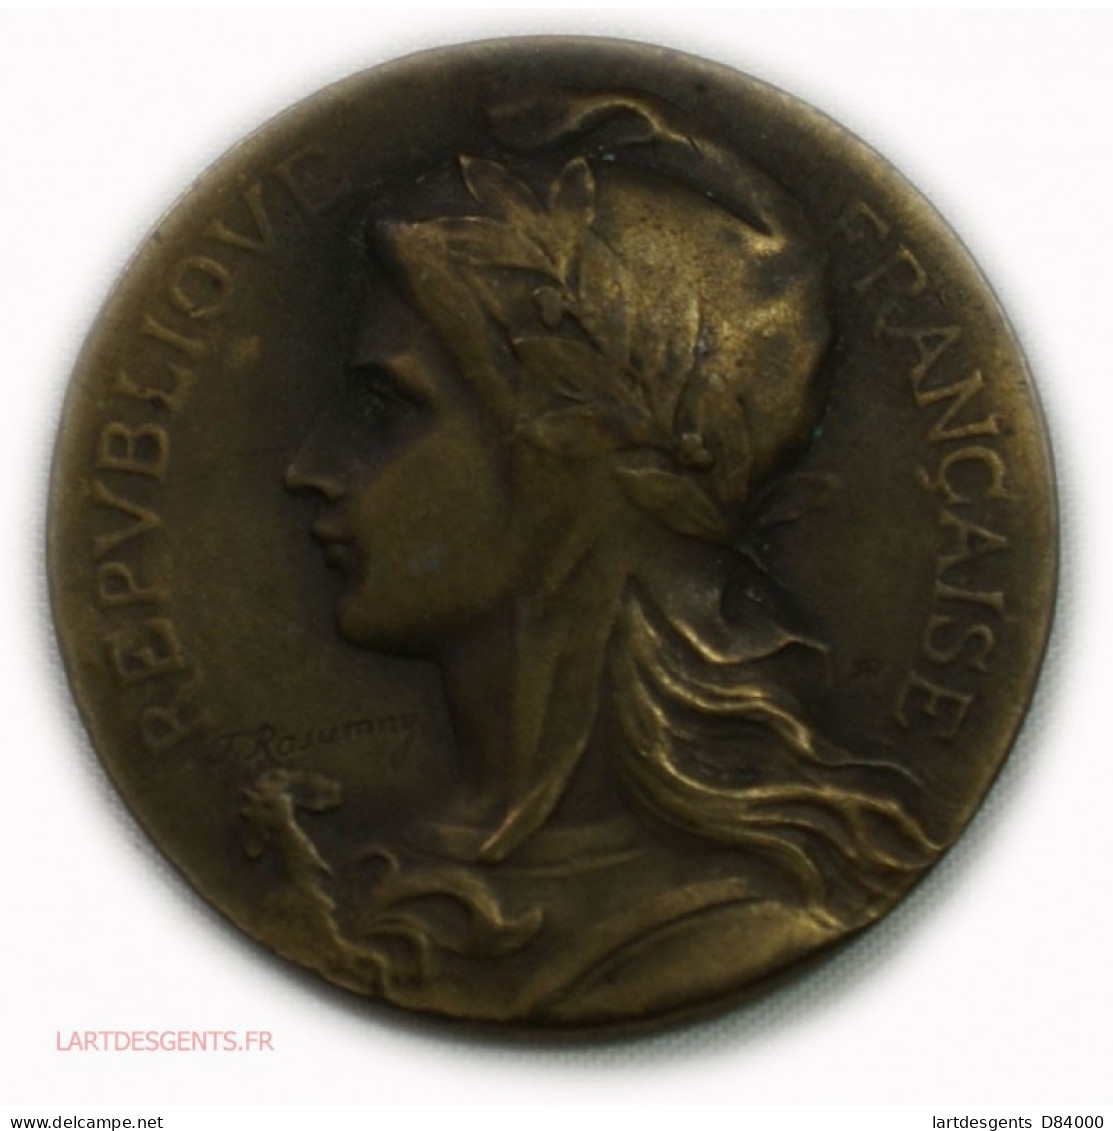 Médaille Alimentation En Gros 1943, Lartdesgents - Adel